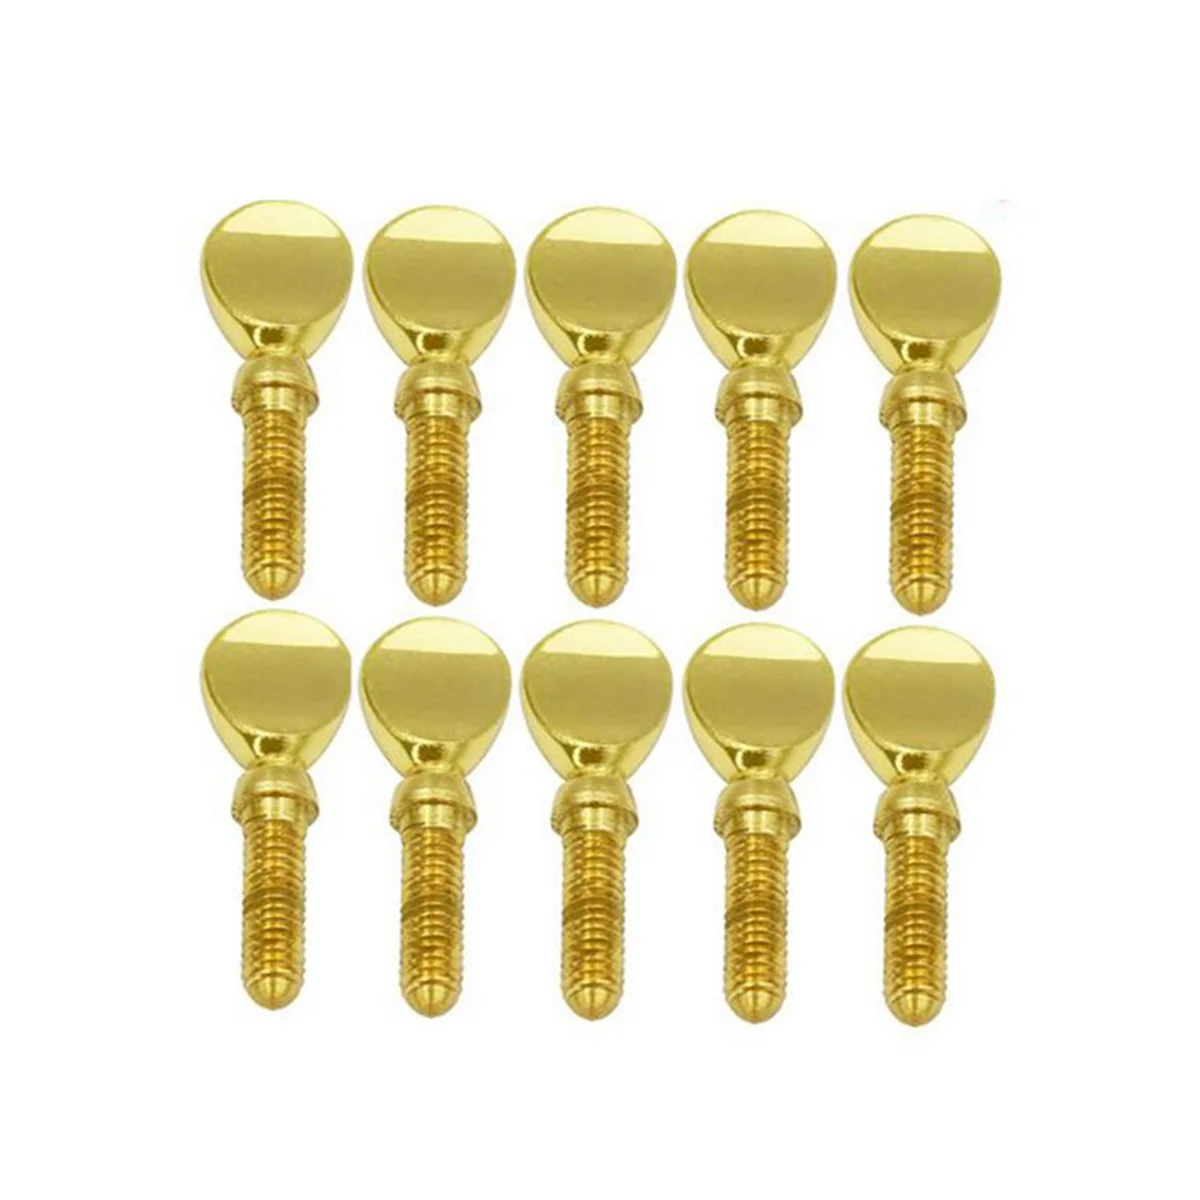 

10 Pieces Saxophone Professional Connection Accessories, Metal Gold Screws Fixing Saxophone Clarinet Neck Screws